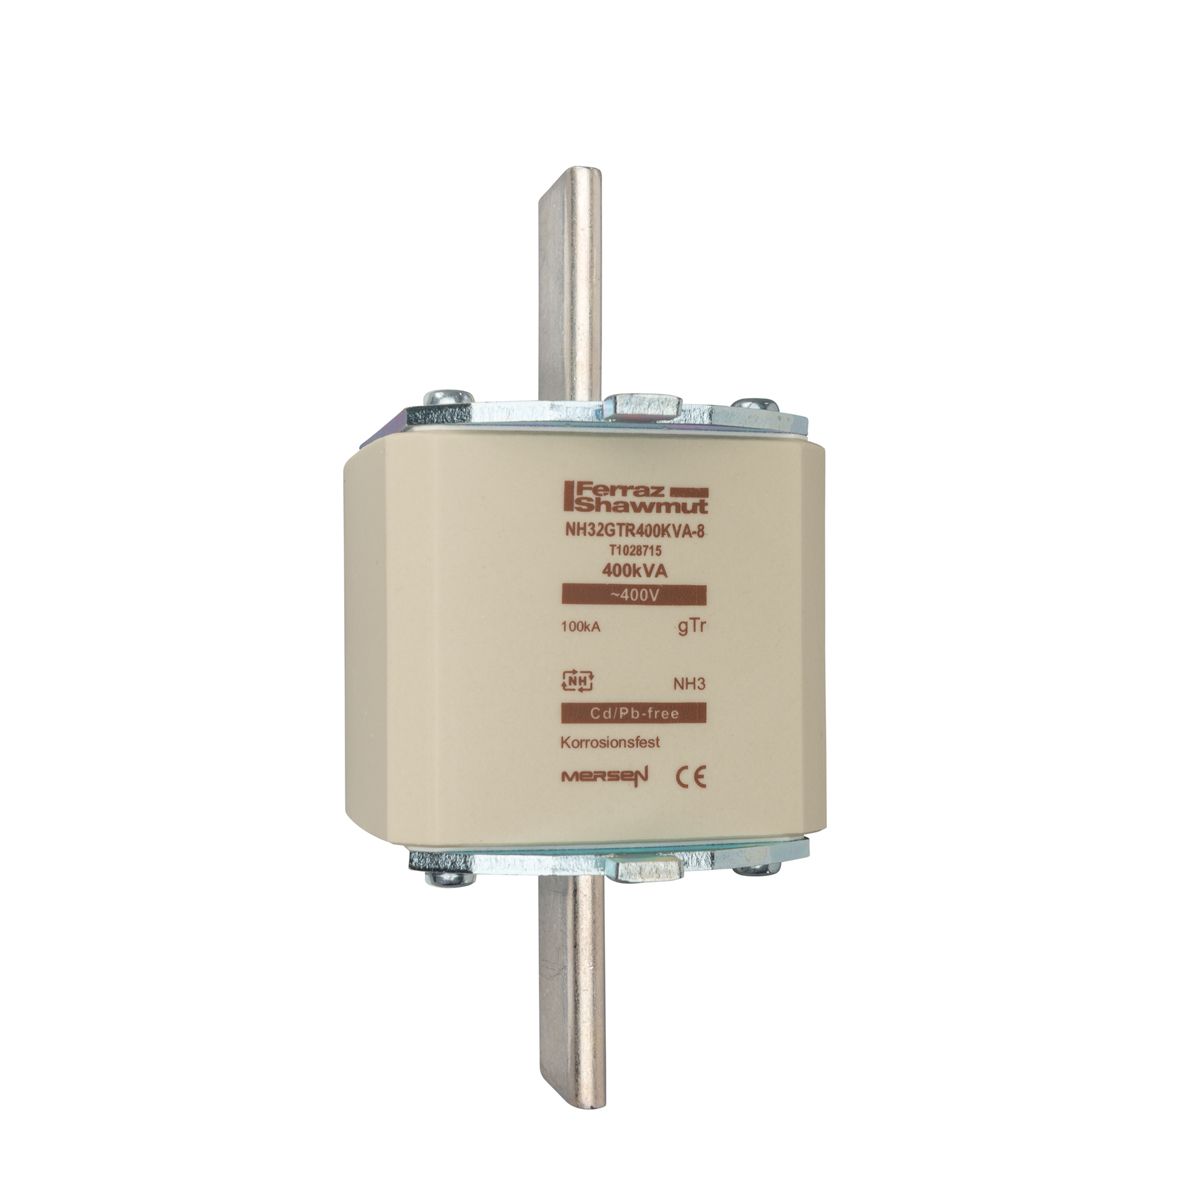 T1028715A - NH fuse-link gTr, 400VAC, size 3, 400KVA, top indicator/live tags